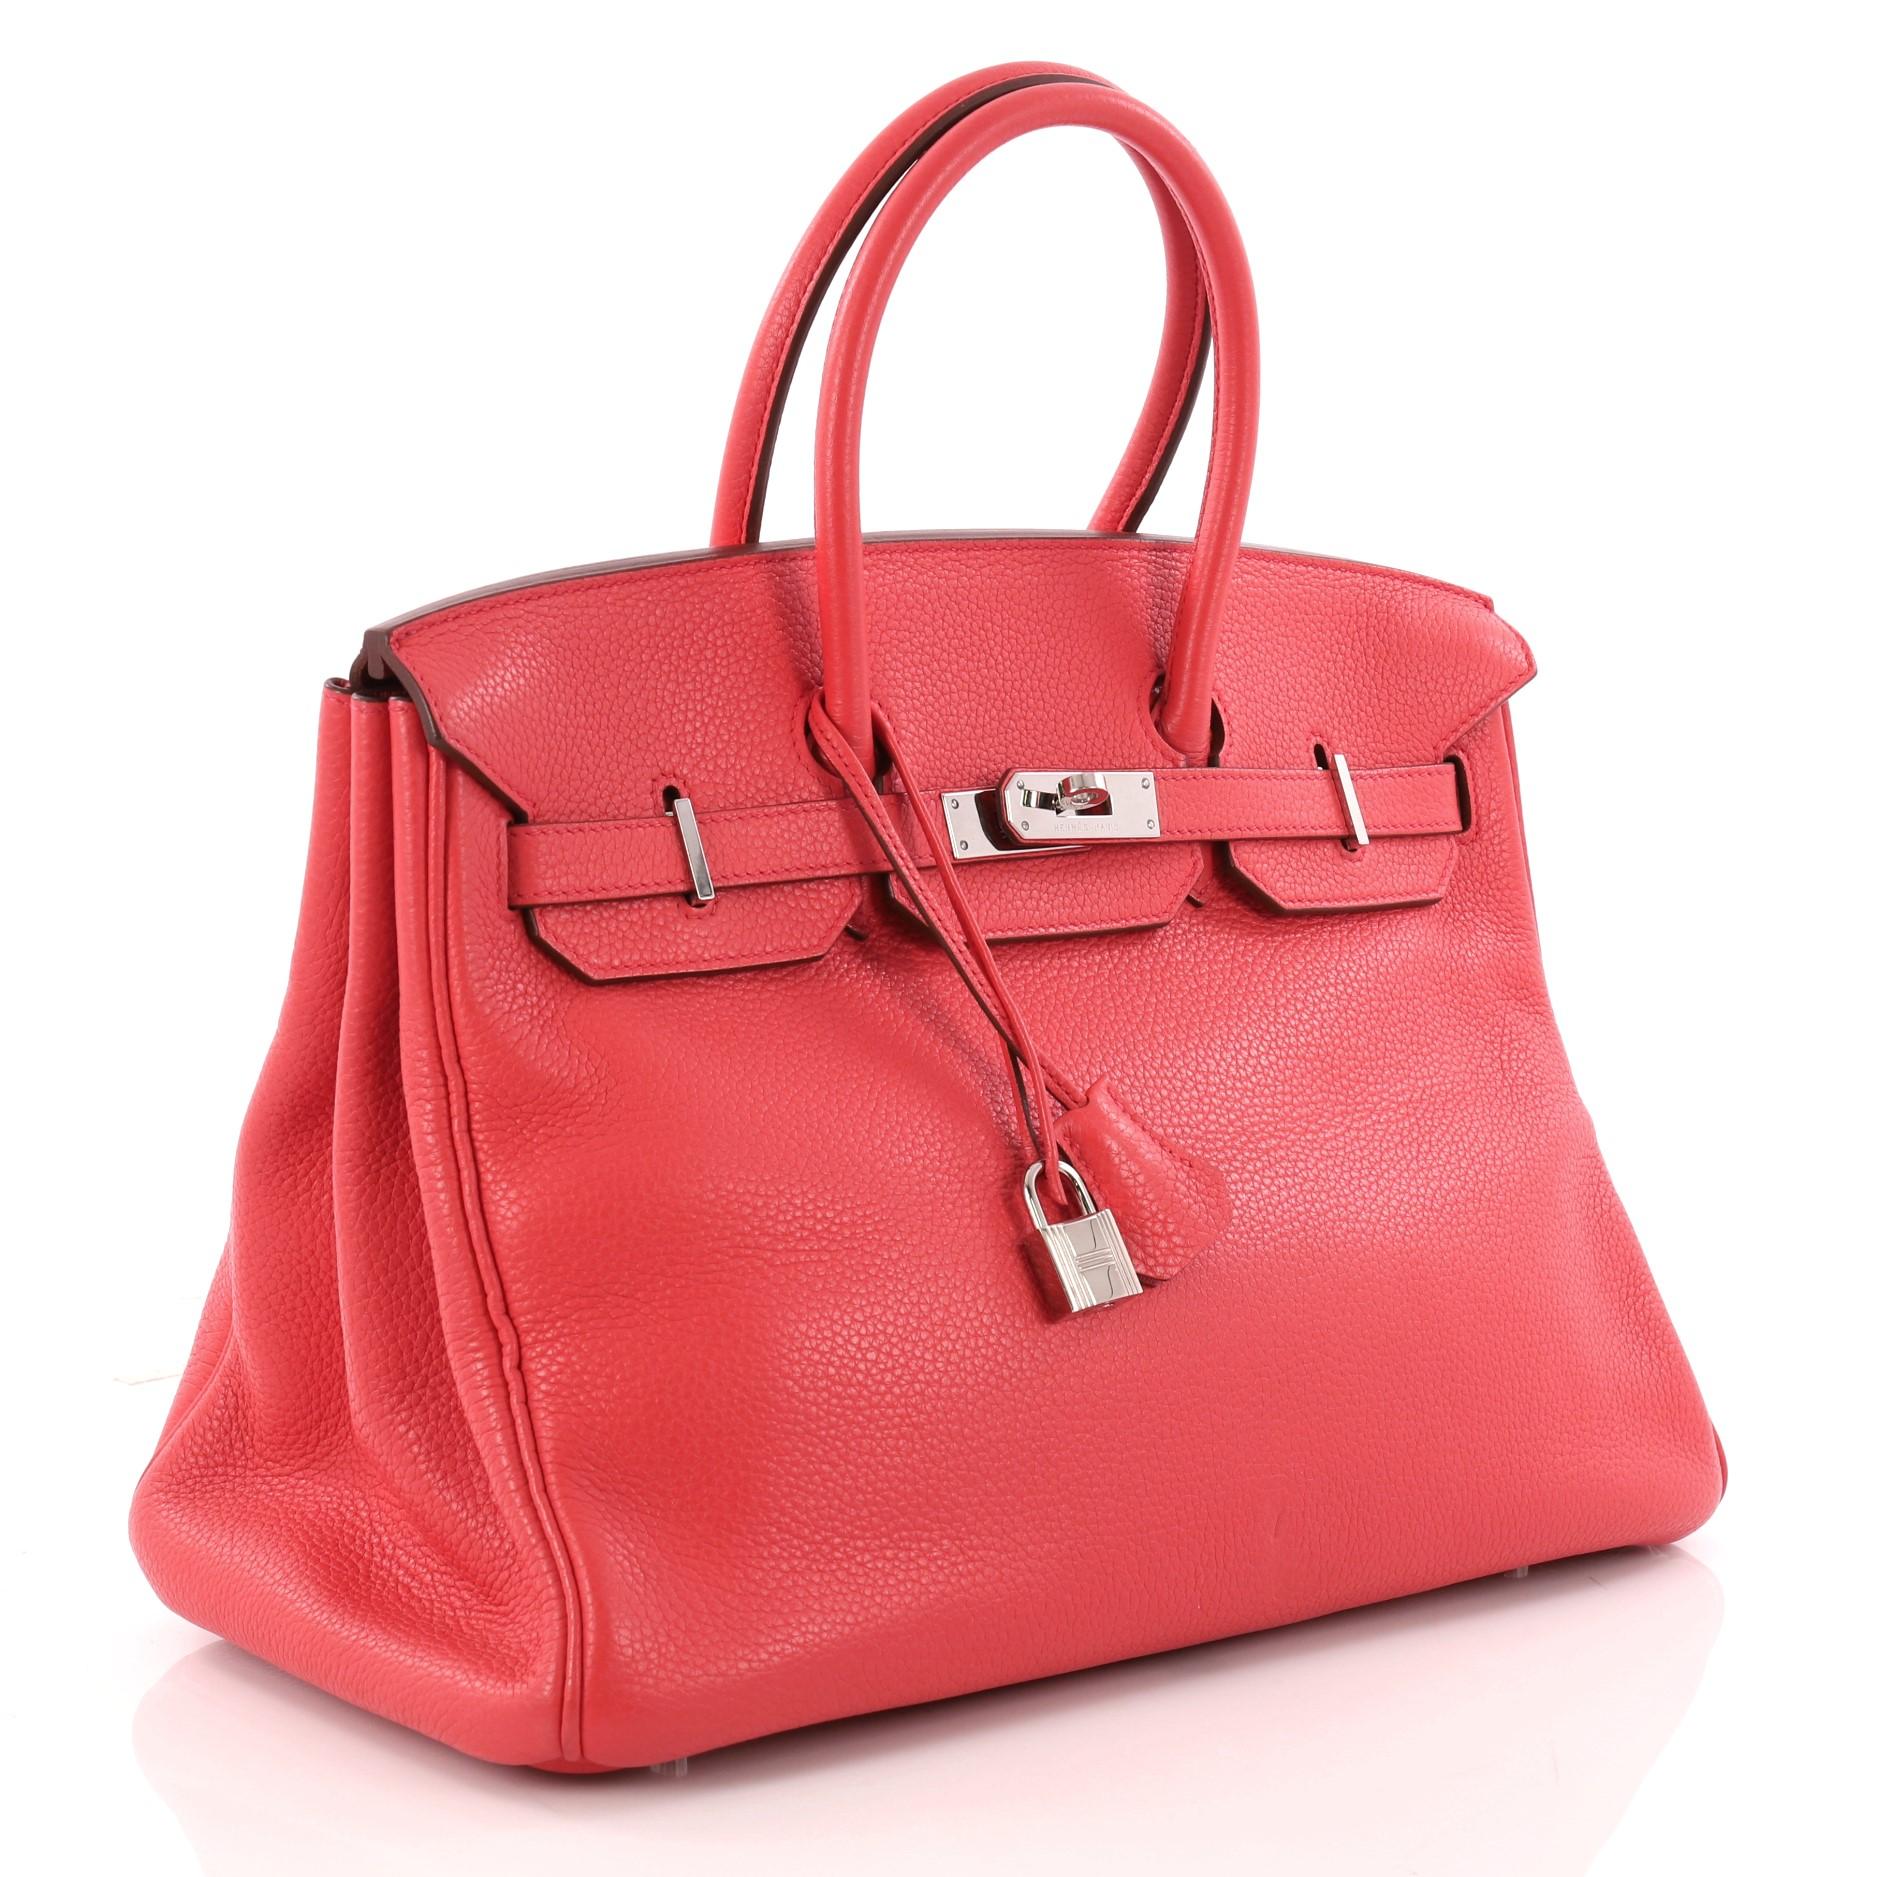 Red Hermes Birkin Handbag Rose Jaipur Clemence with Palladium Hardware 35